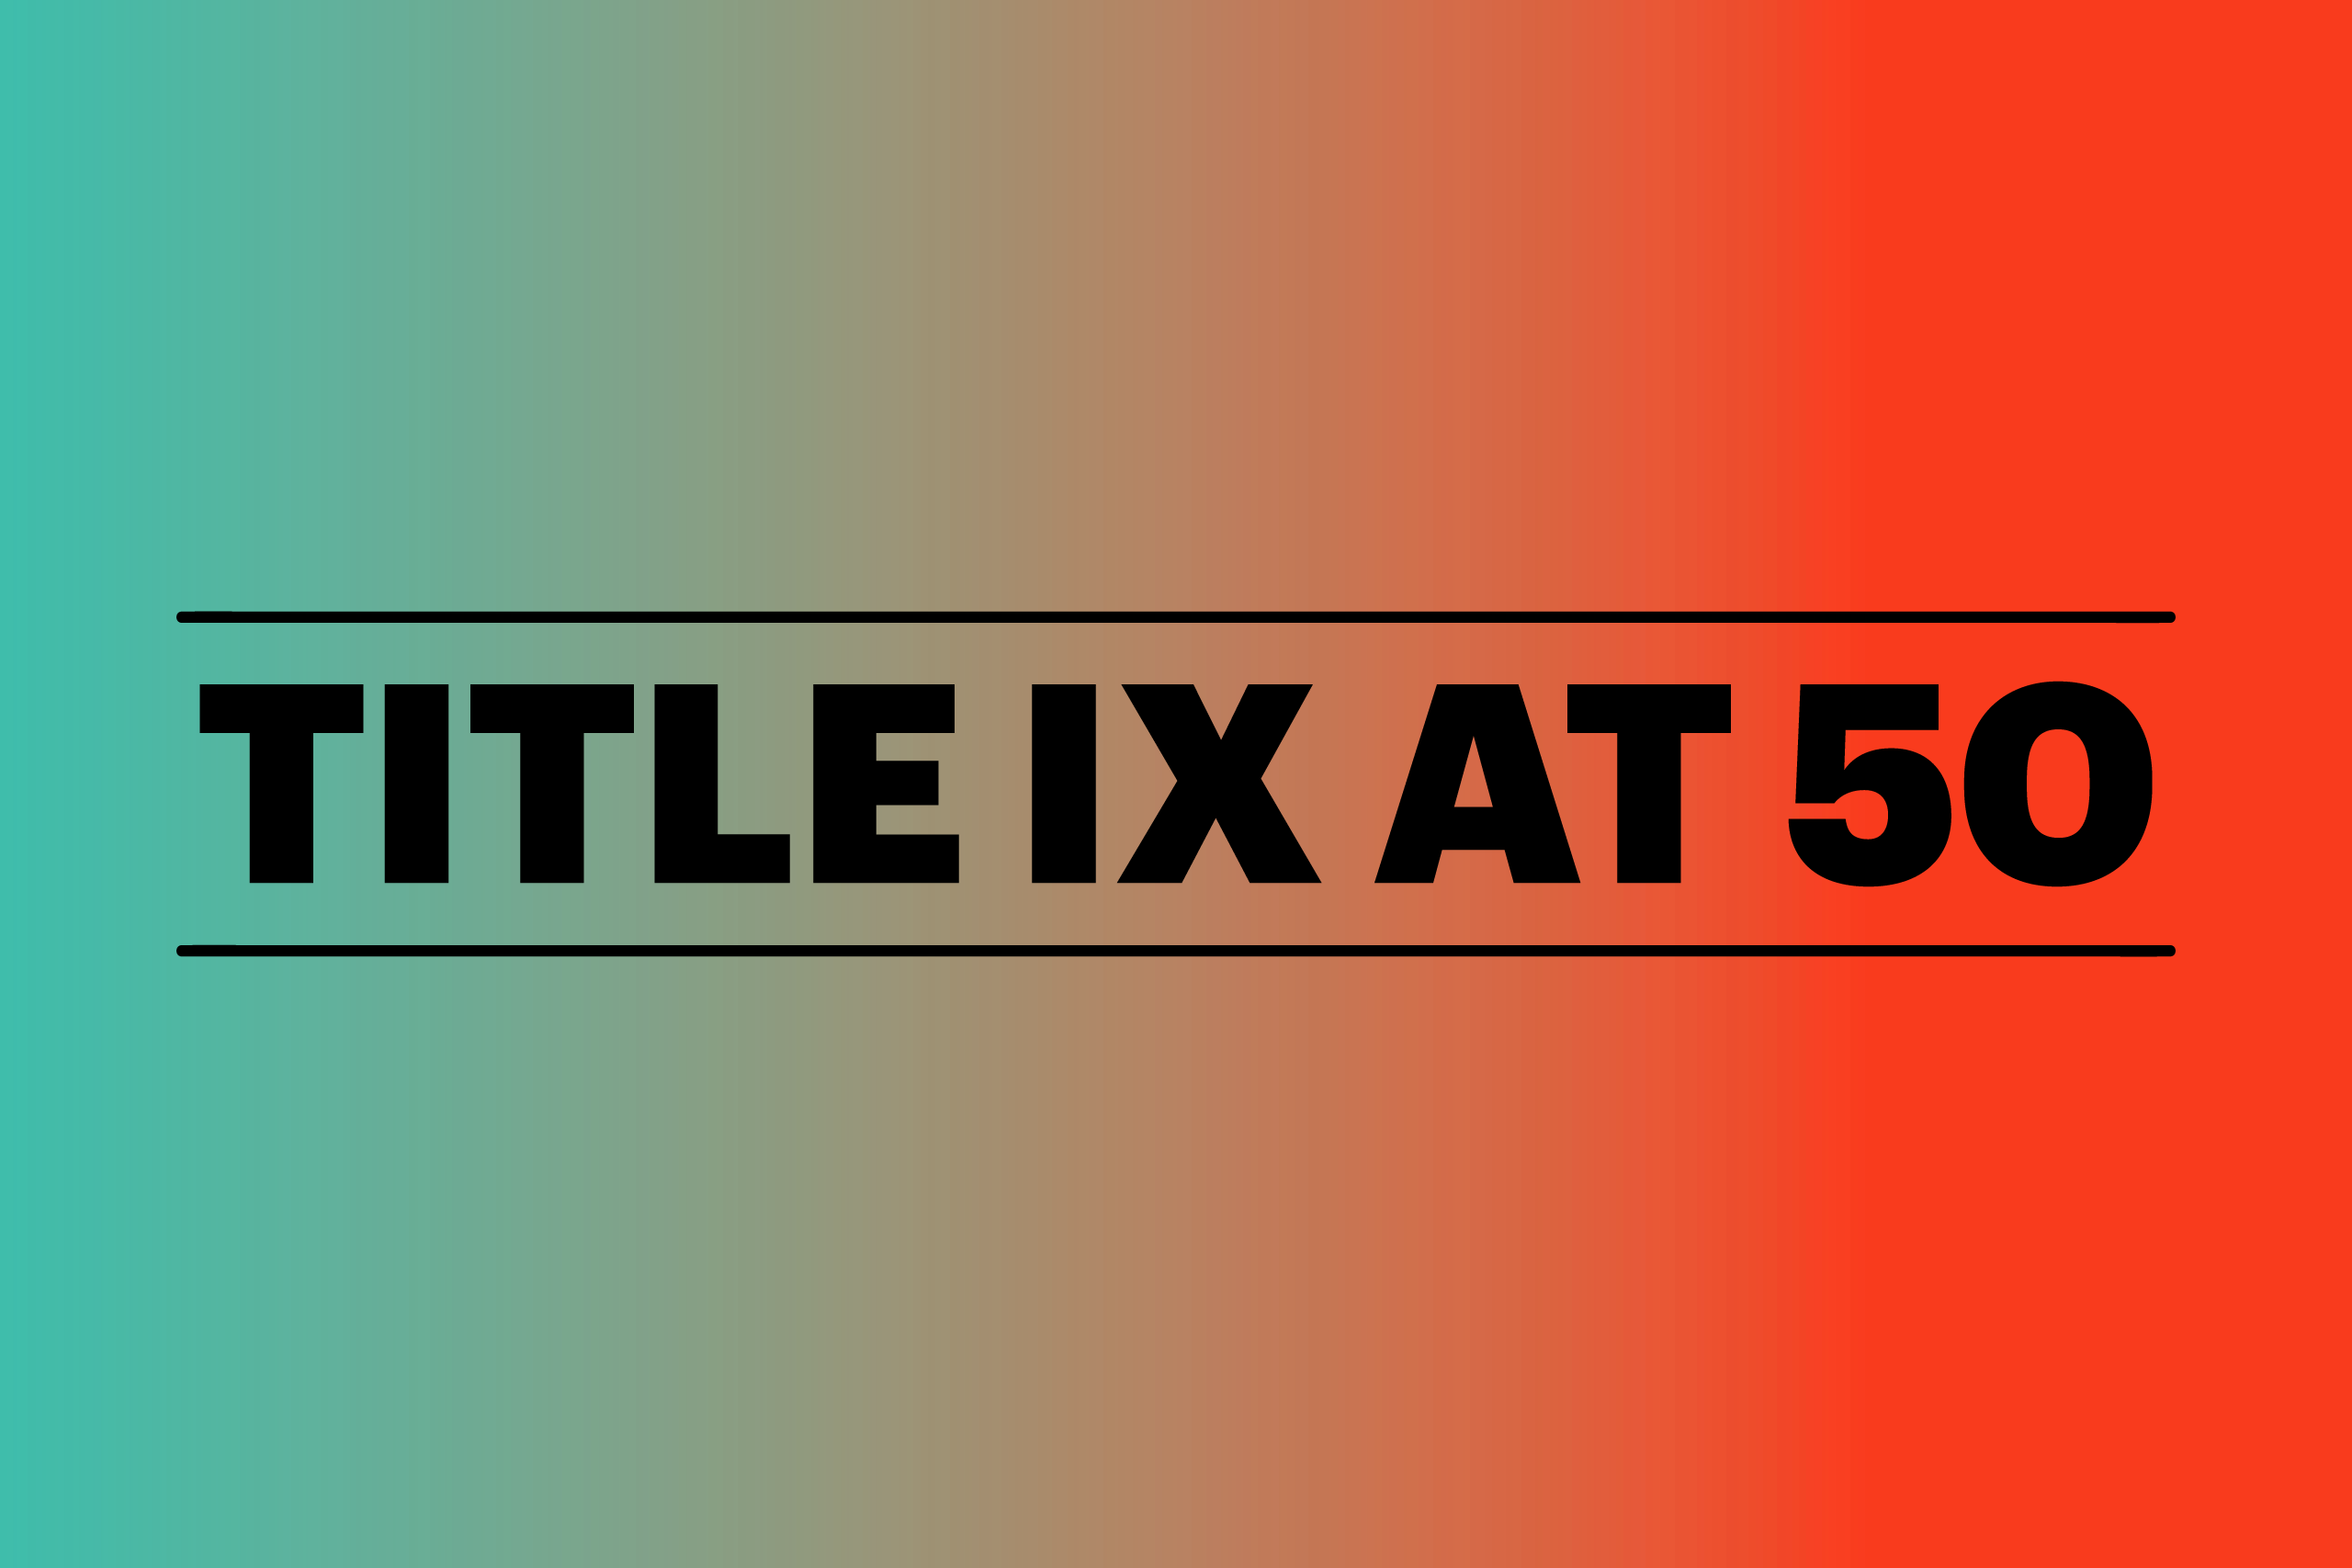 TITLE IX AT 50